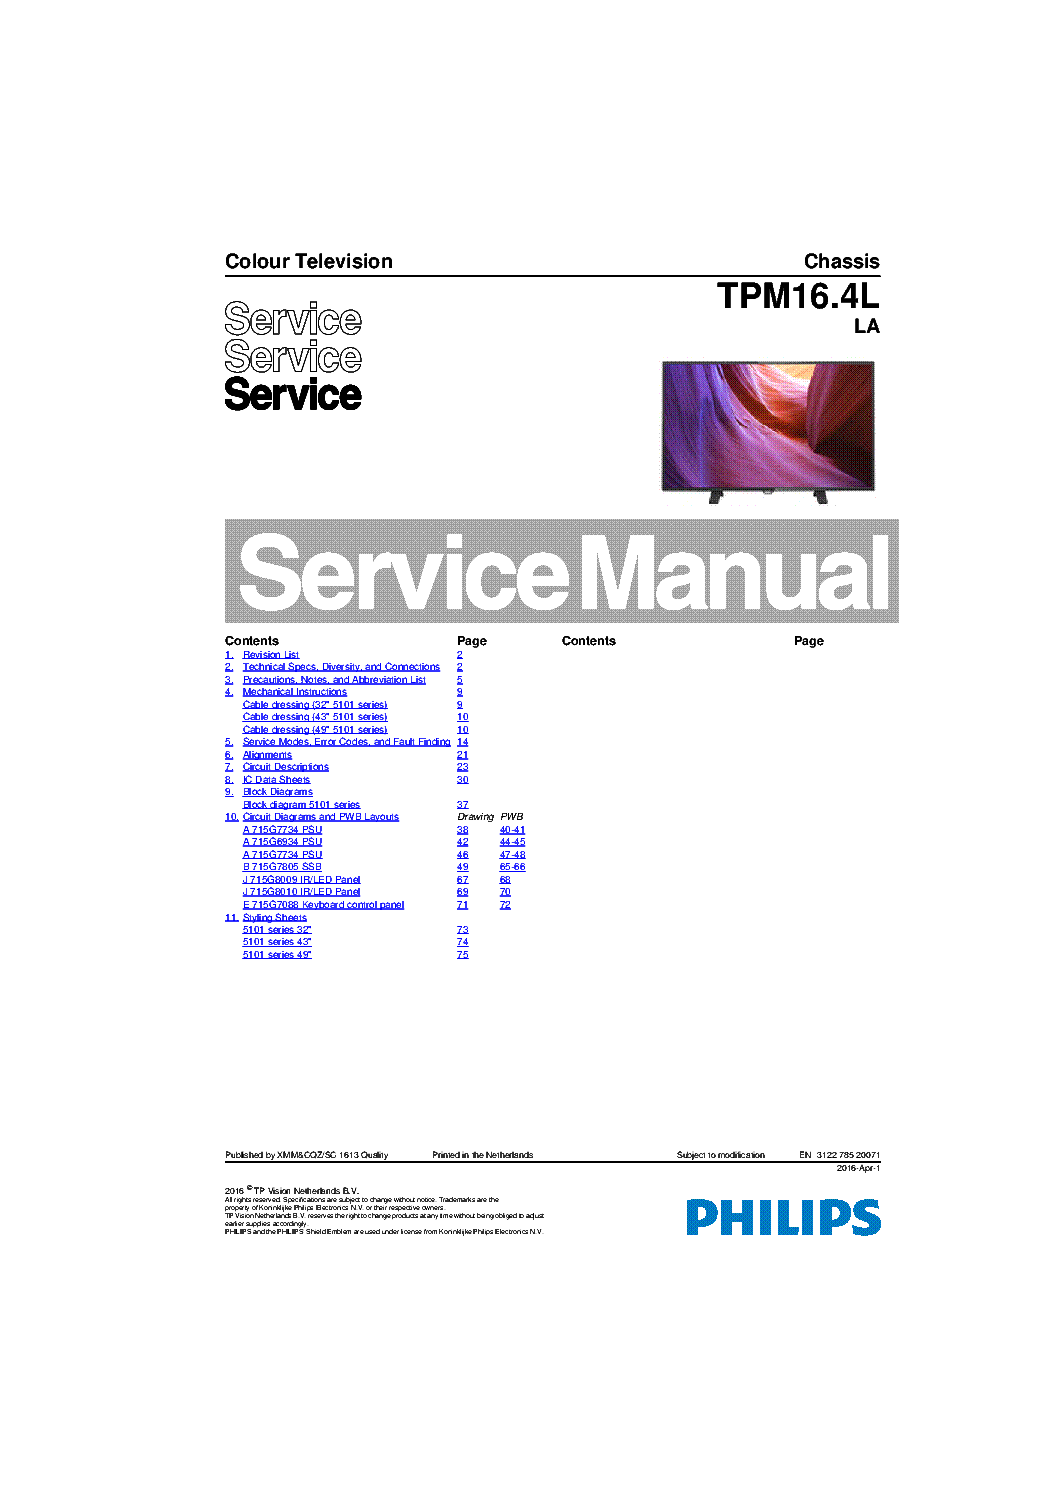 PHILIPS 32PHG5101 77 CHASSIS TPM16.4L LA SM service manual (1st page)